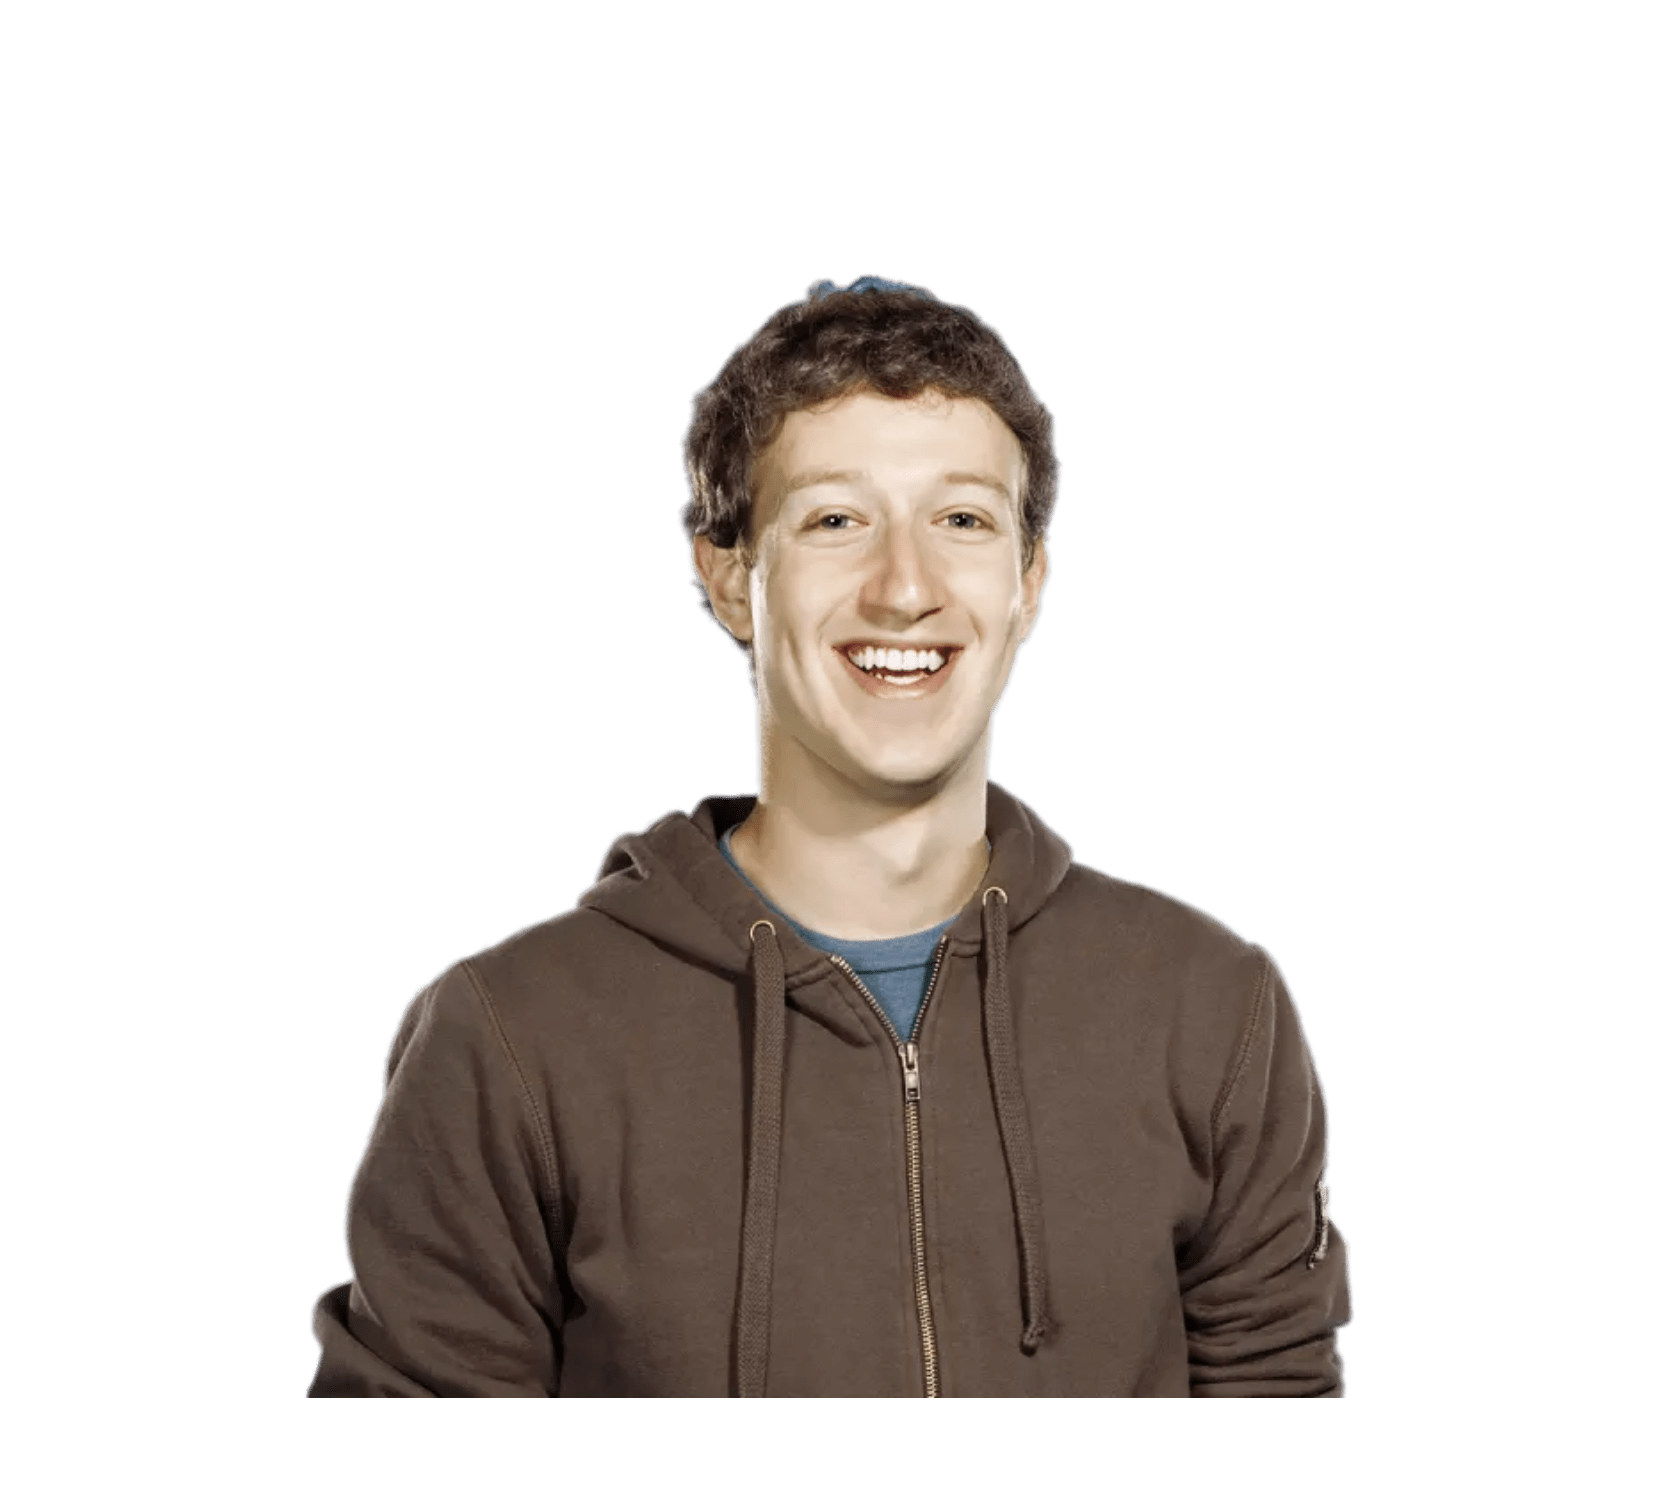 Mark Zuckerberg Facebook Founder PNG Best Image